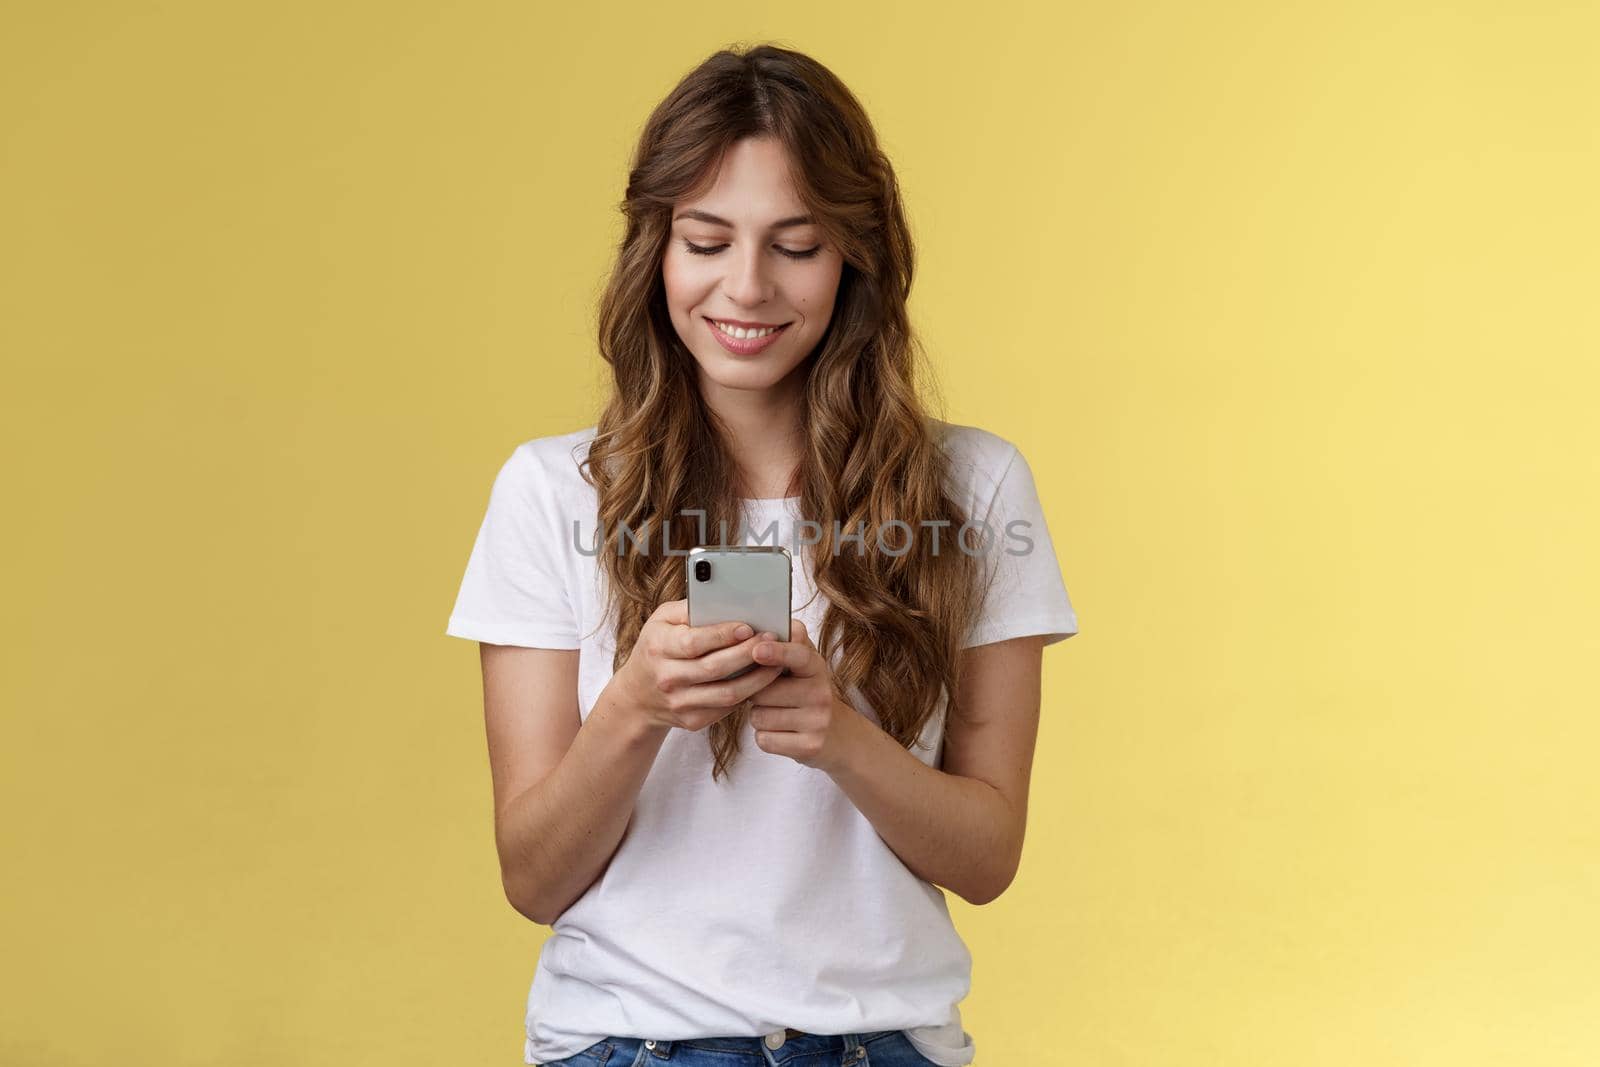 Lovely feminine tender caucasian girl white t-shirt jeans hold smartphone texting messaging girlfriend smiling delighted look tenderly lovely smile mobile phone screen yellow background.